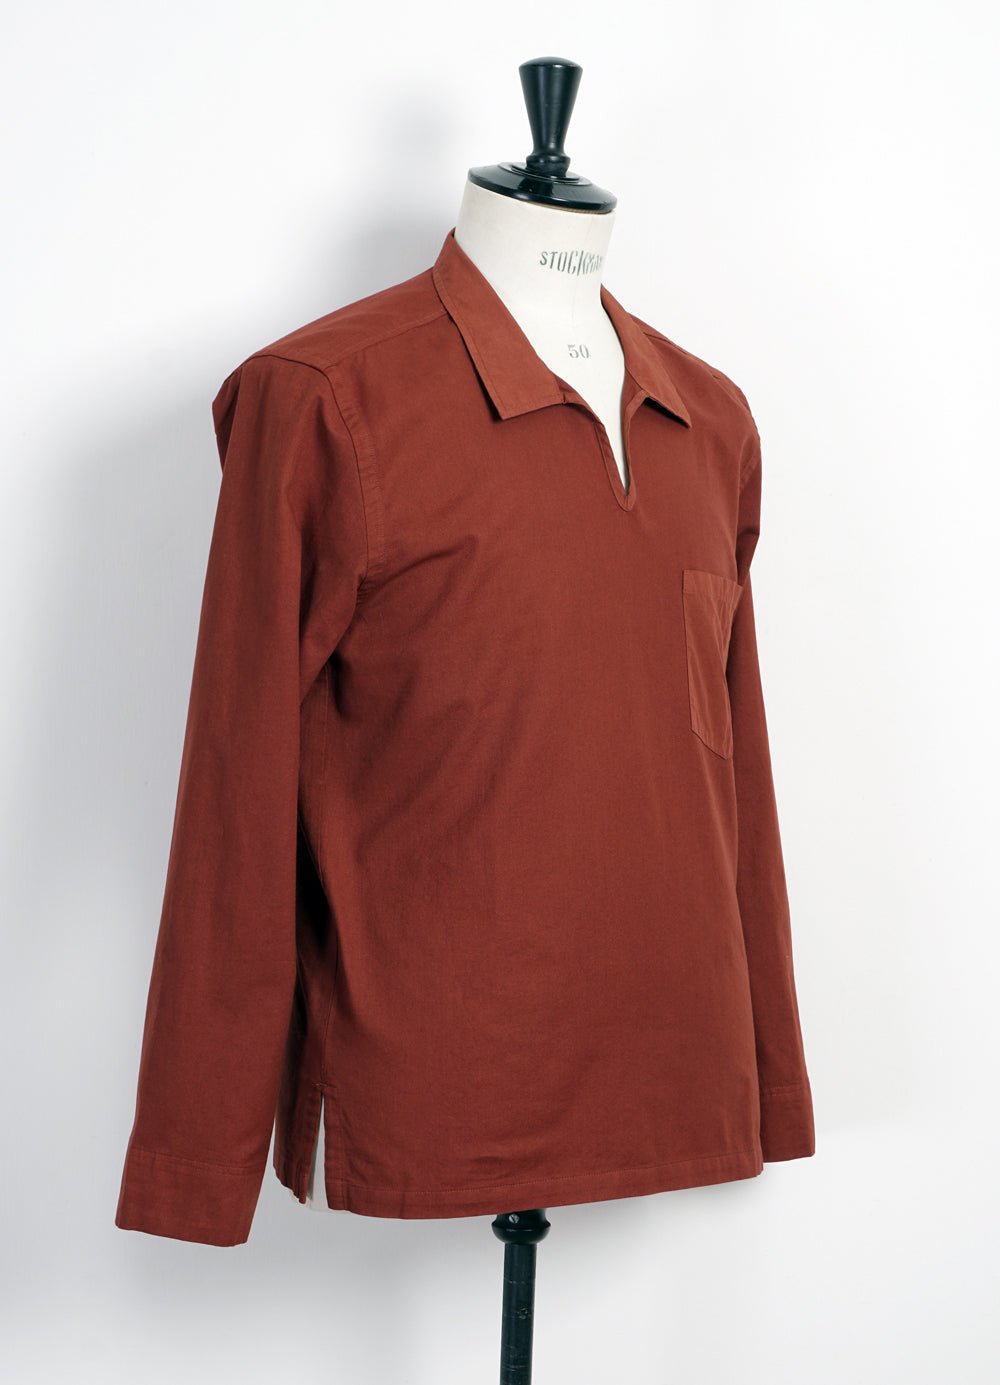 HANSEN GARMENTS - MARIUS | Casual Pull On Shirt | Terracotta - HANSEN Garments